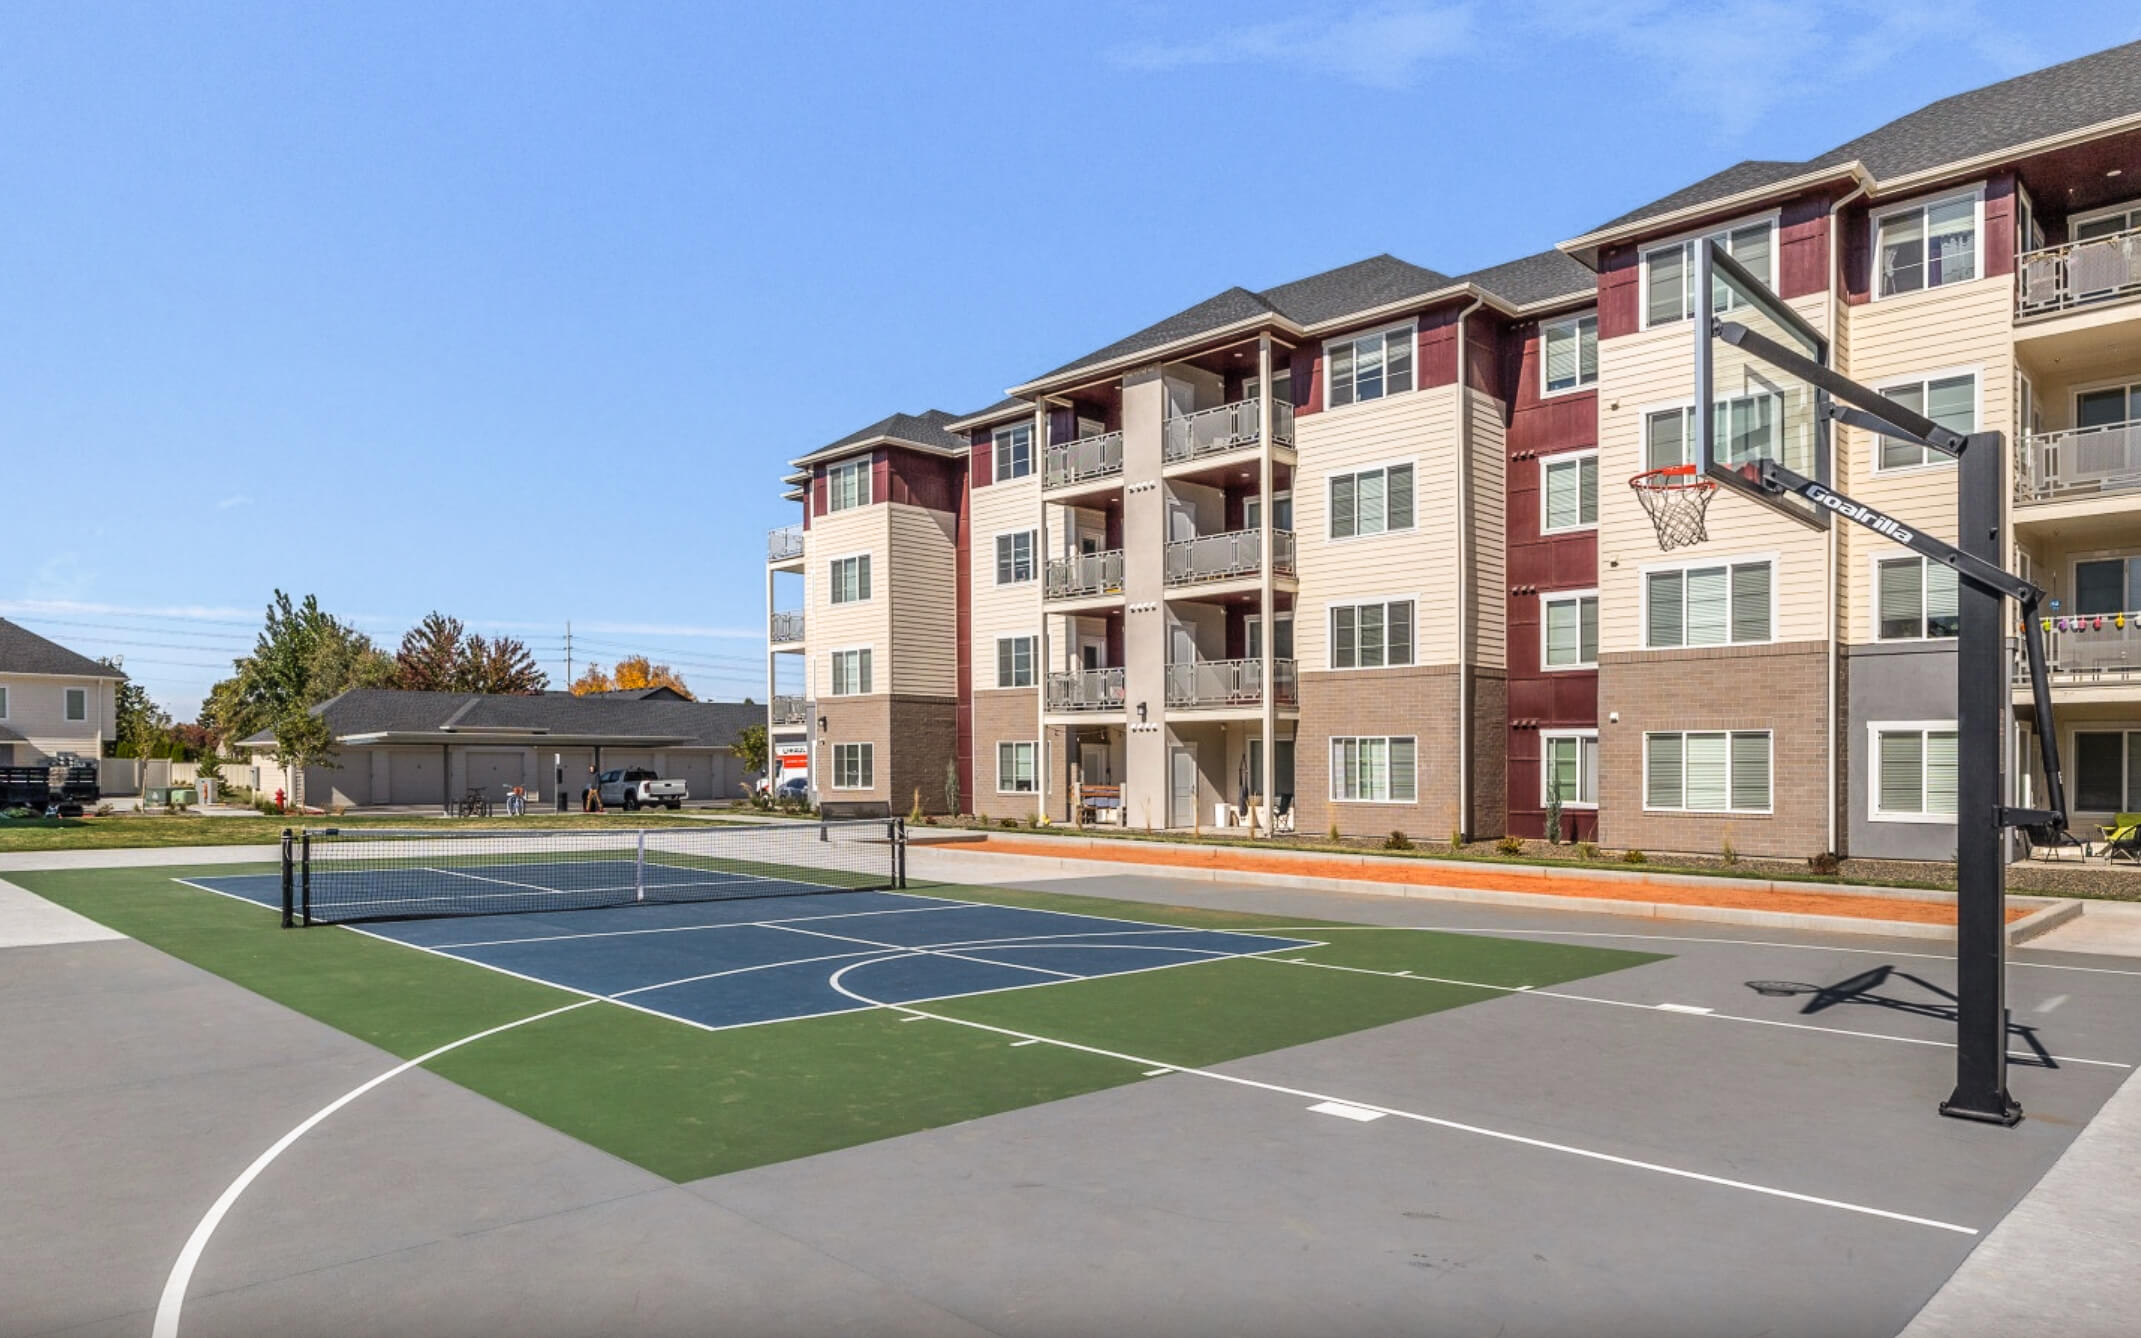 Paragon Corporate Housing - Village East Apartments - West Boise Idaho